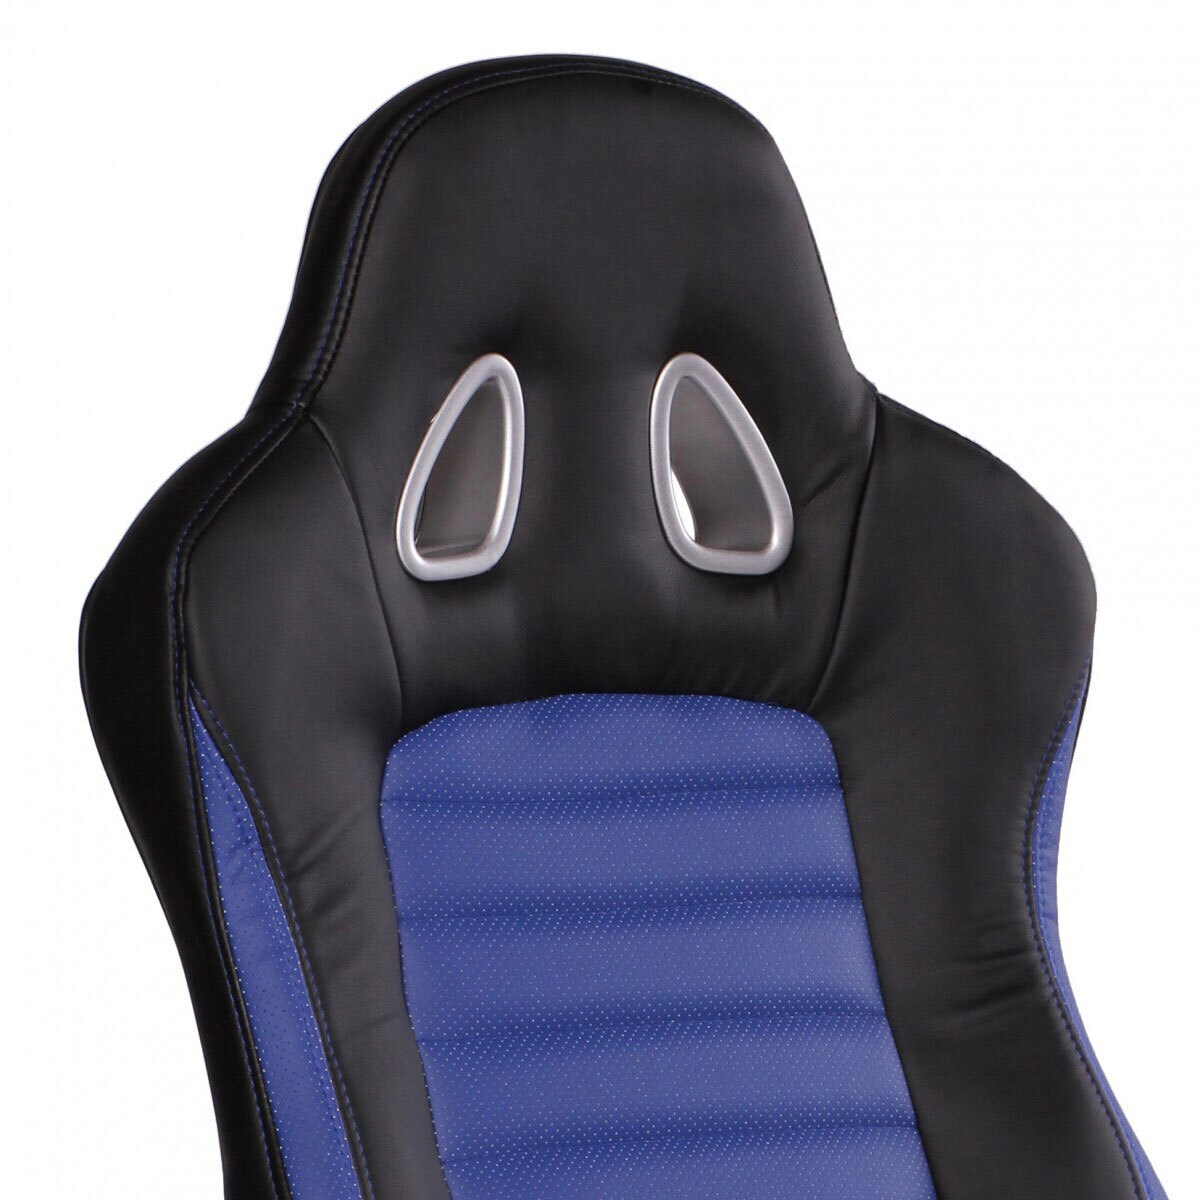 CASAVANTI Gaming Stuhl 66 x 131 cm schwarz / blau